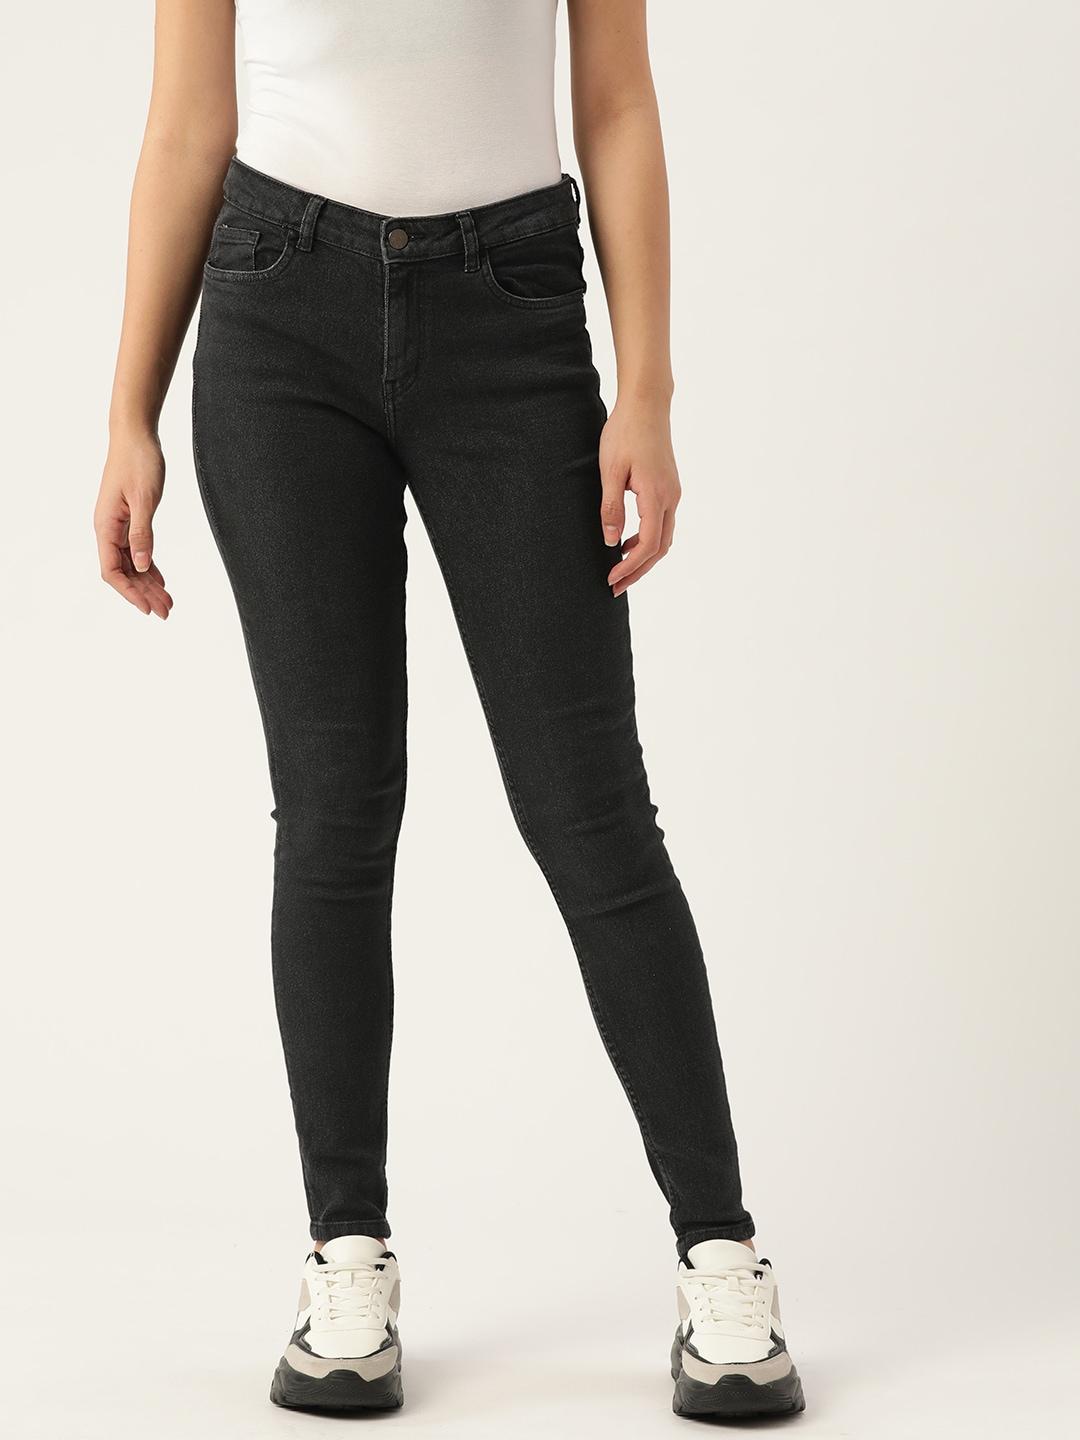 dressberry-women-black-skinny-fit-stretchable-jeans